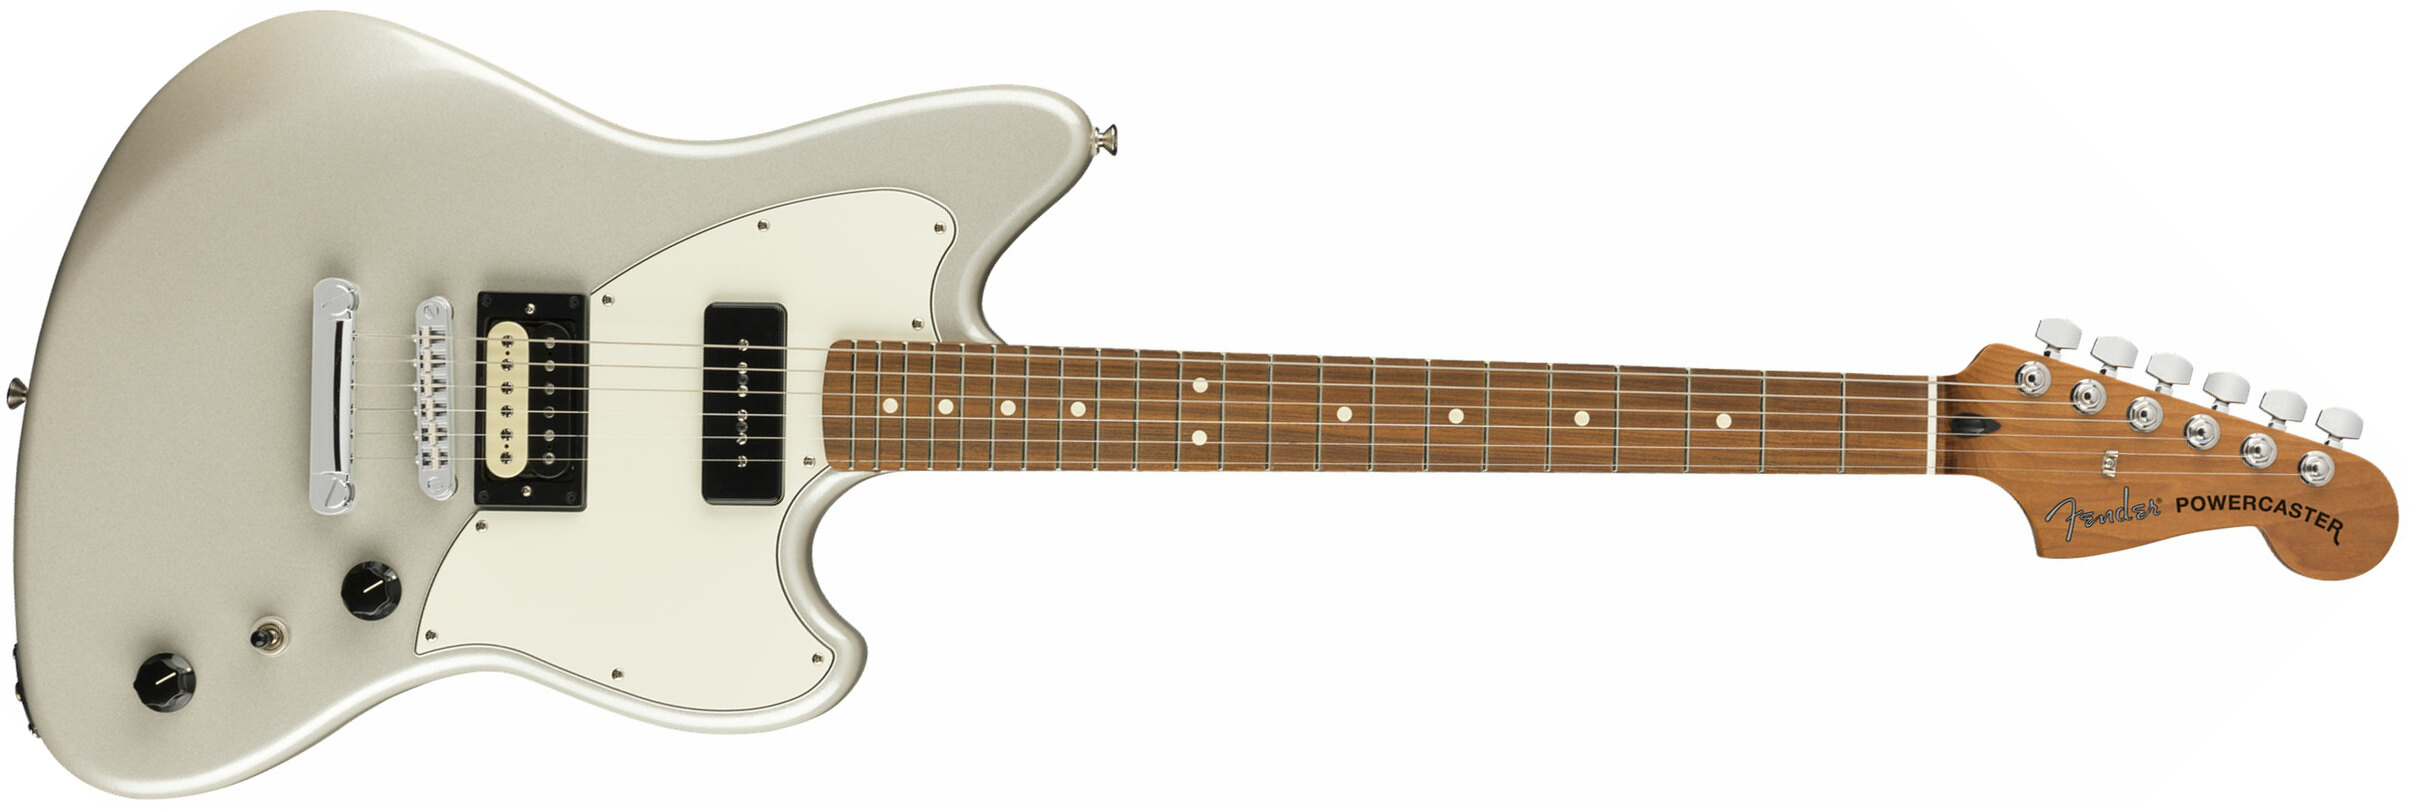 Fender Powercaster Alternate Reality Ltd Hp90 Ht Pf - White Opal - Retro-rock elektrische gitaar - Main picture